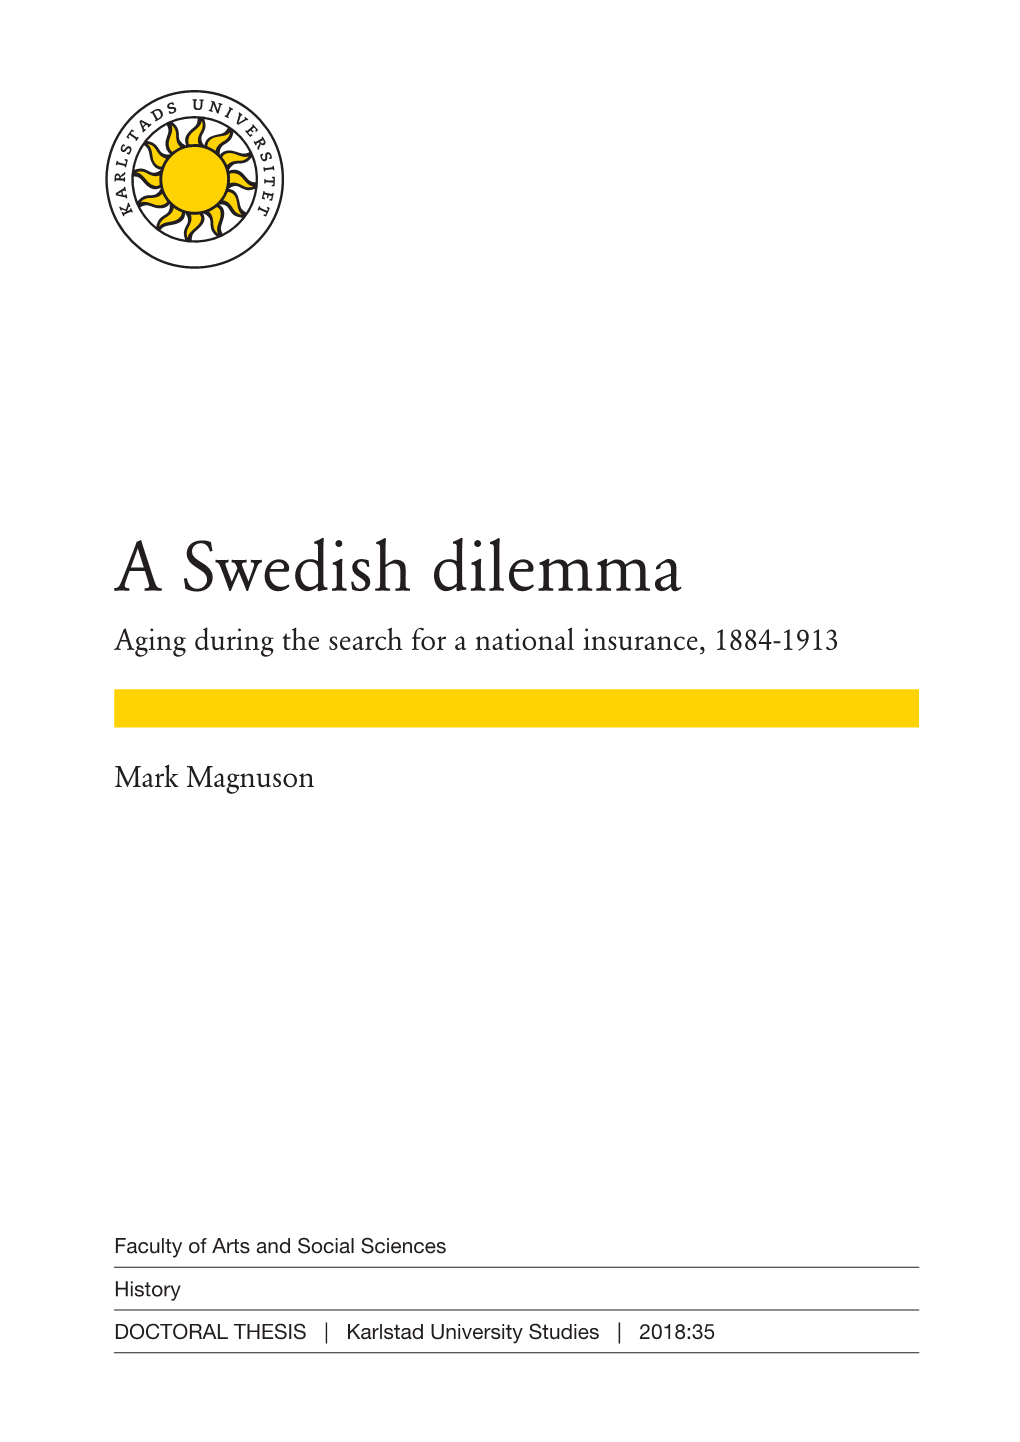 A Swedish Dilemma |